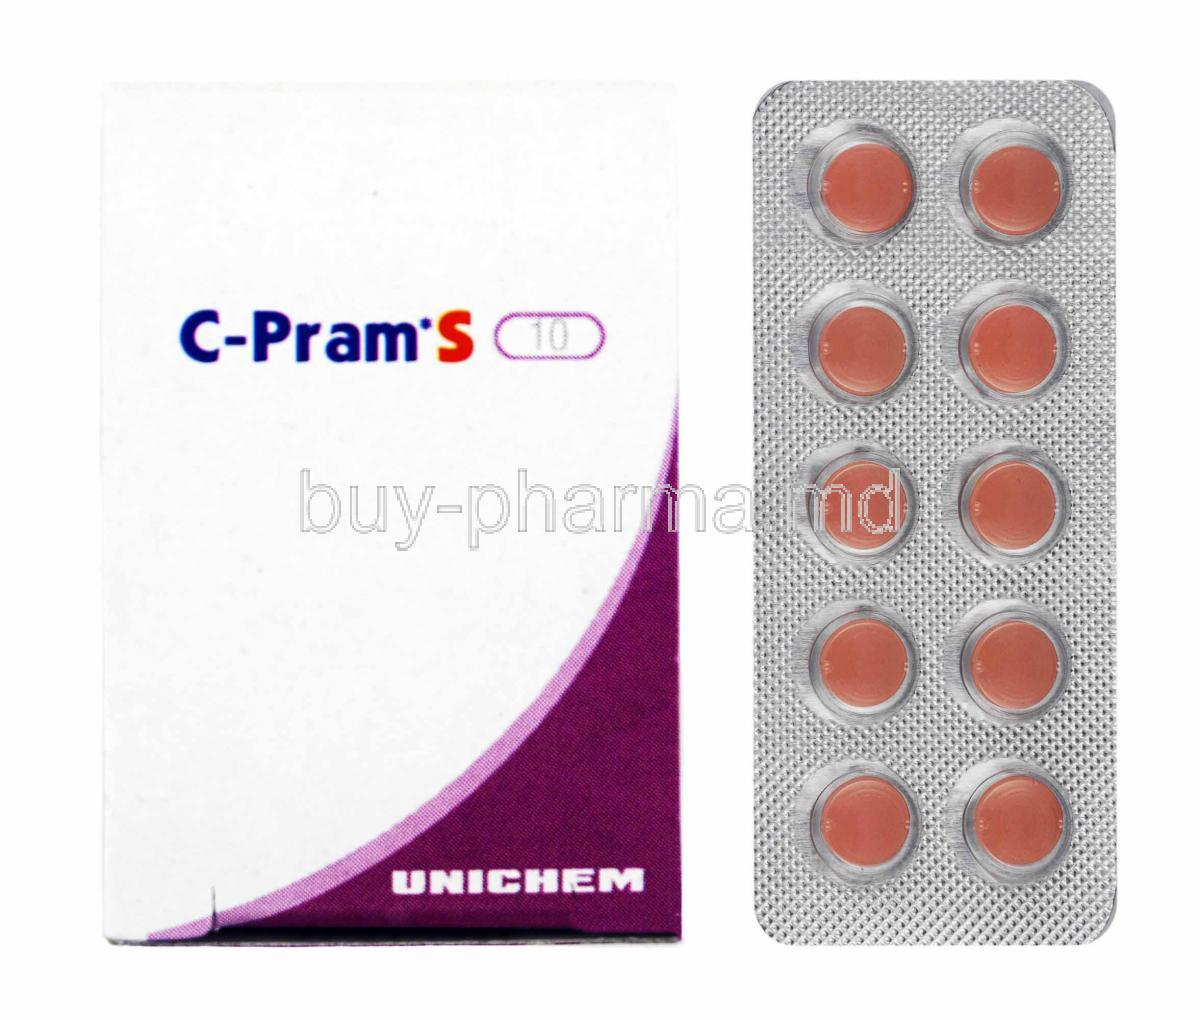 C-Pram S, Escitalopram 10mg box and tablets